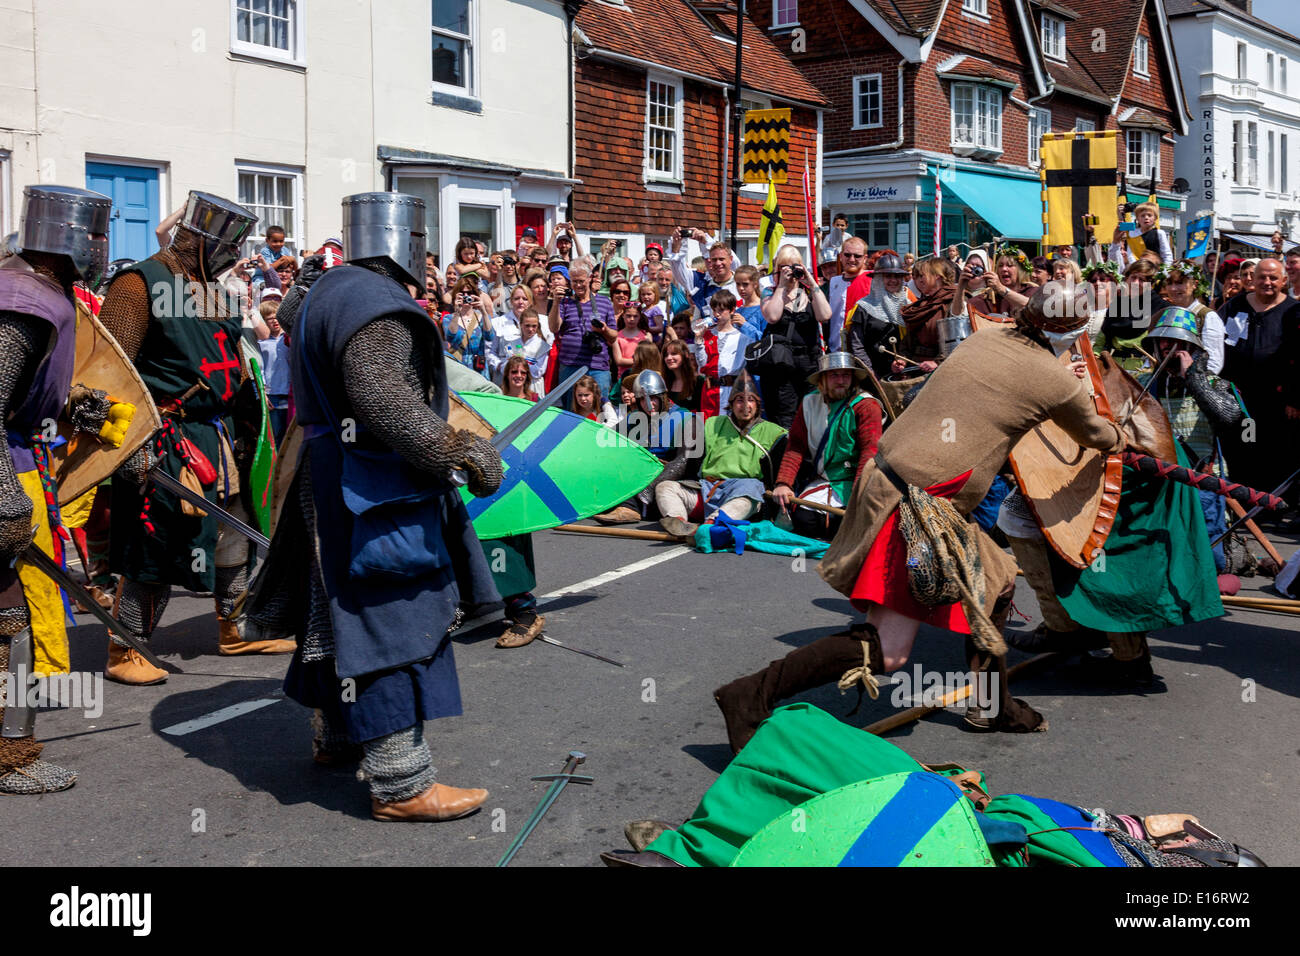 Persone locali in costume medievale Re-Enact la battaglia di Lewes nel 1264, Cliffe High Street, Lewes, Sussex, Inghilterra Foto Stock